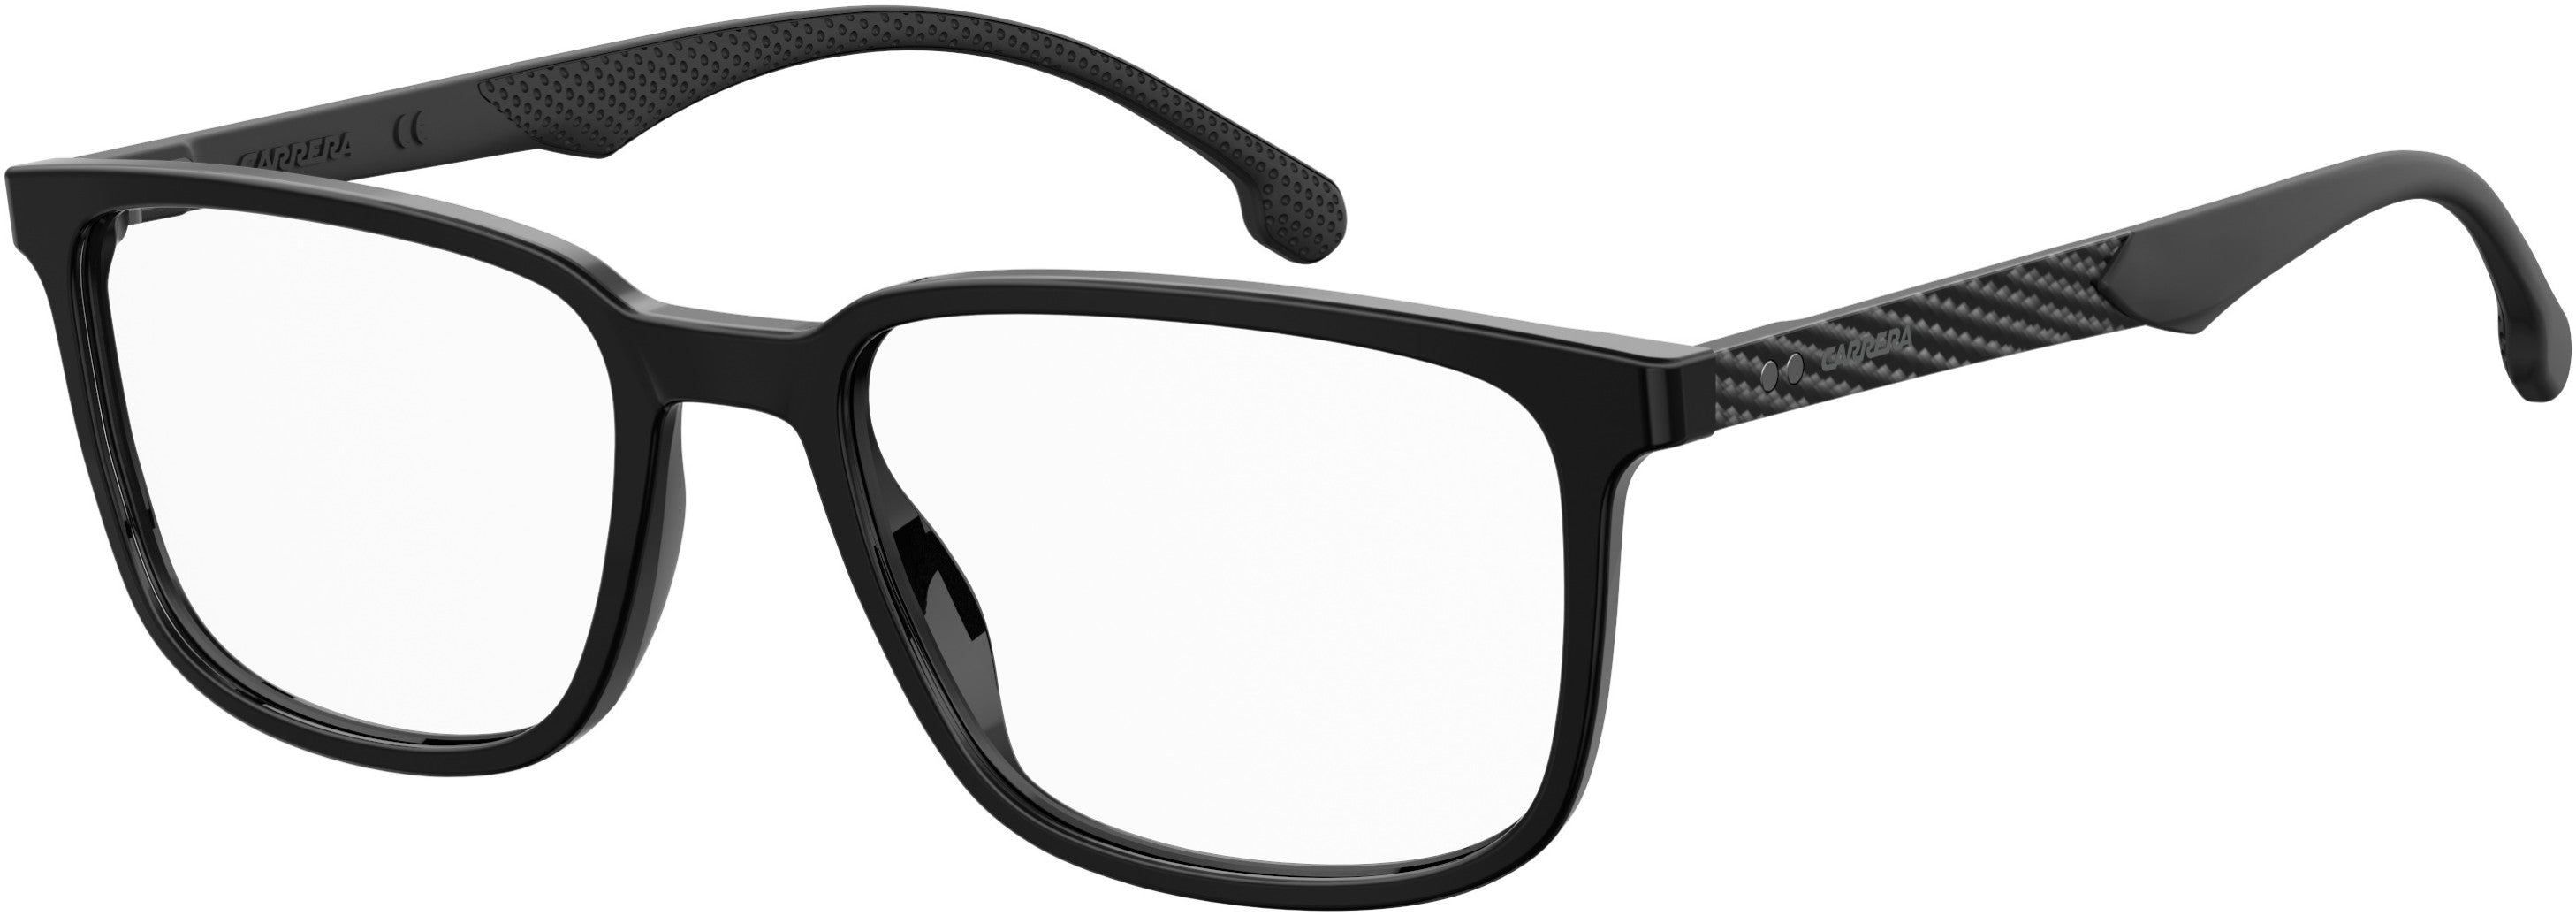  Carrera 8847 Rectangular Eyeglasses 0807-0807  Black (00 Demo Lens)